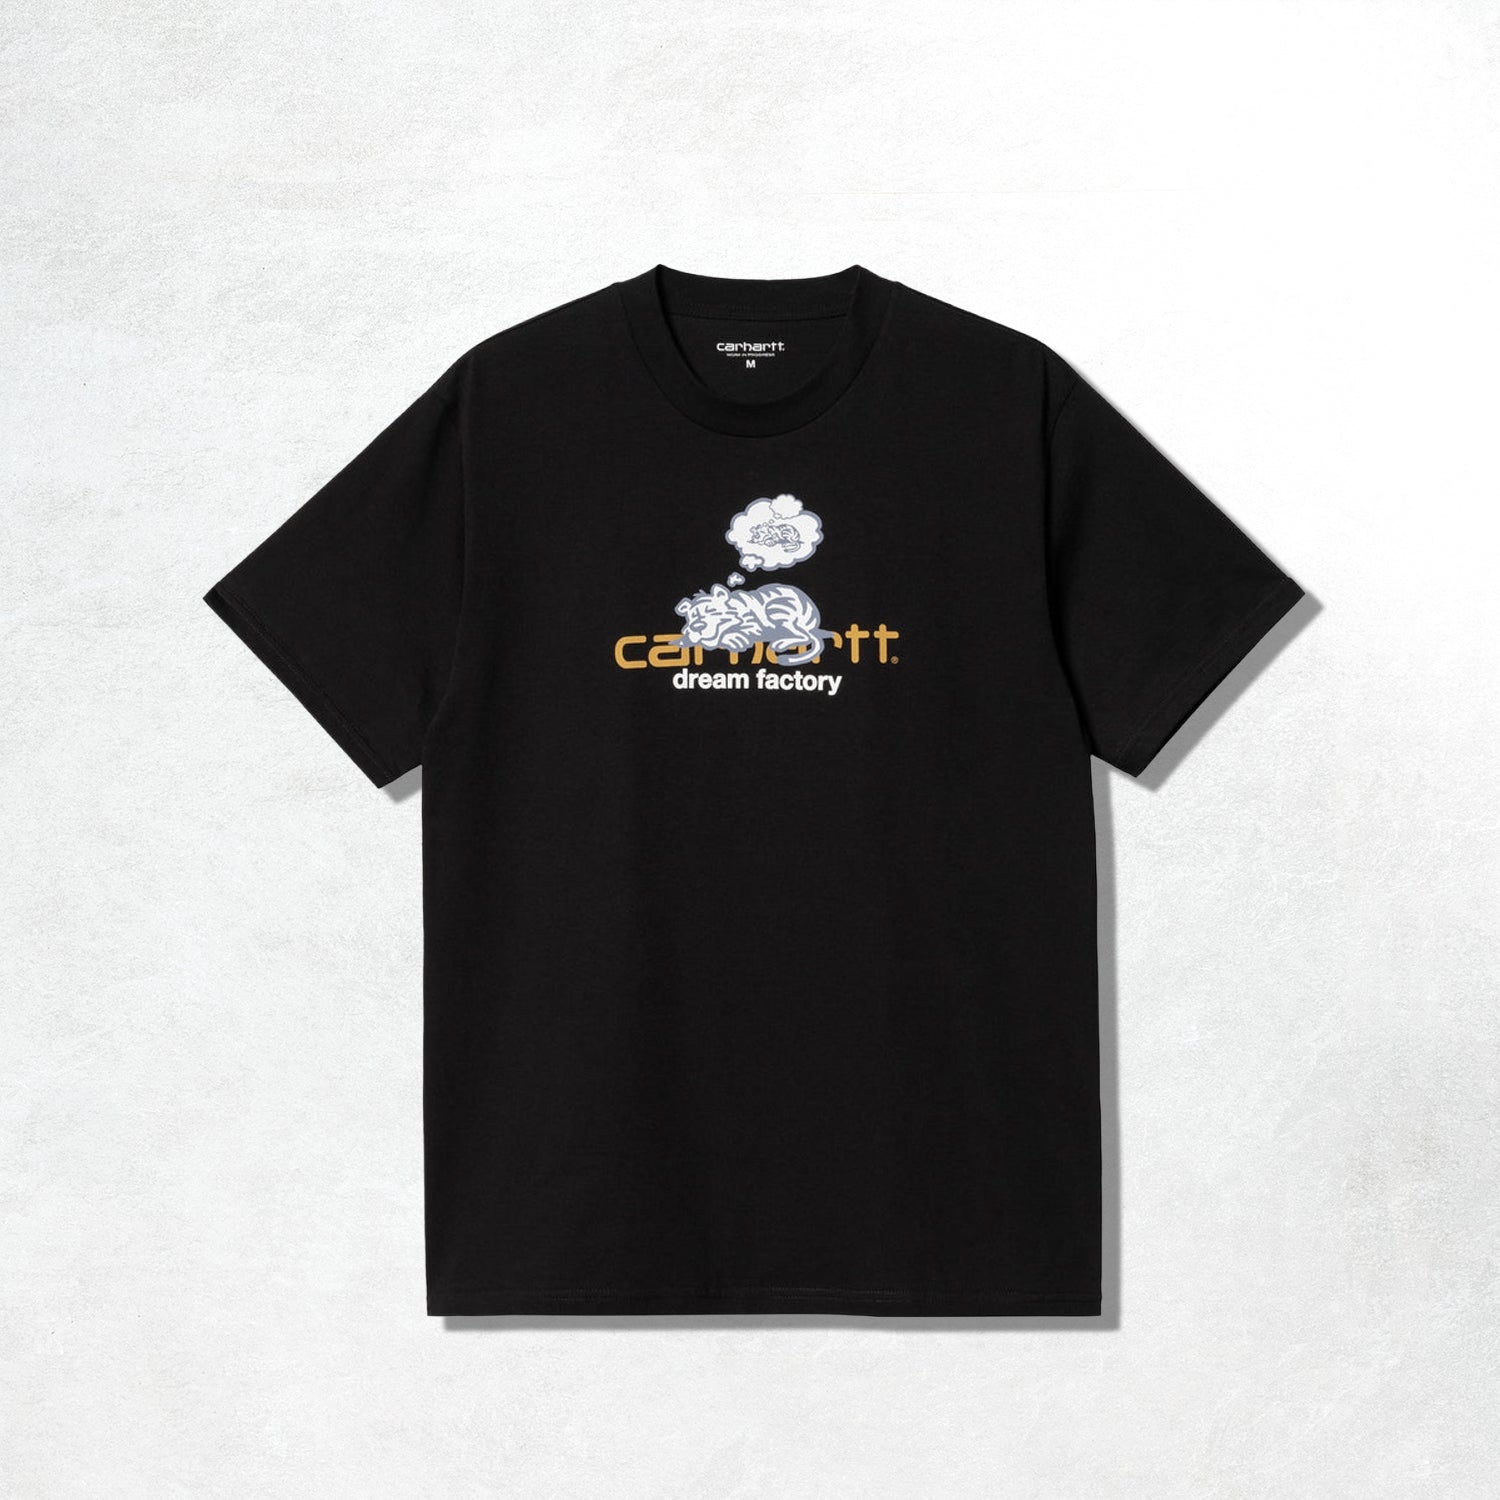 Carhartt WIP S/S Dream Factory T-Shirt: Black